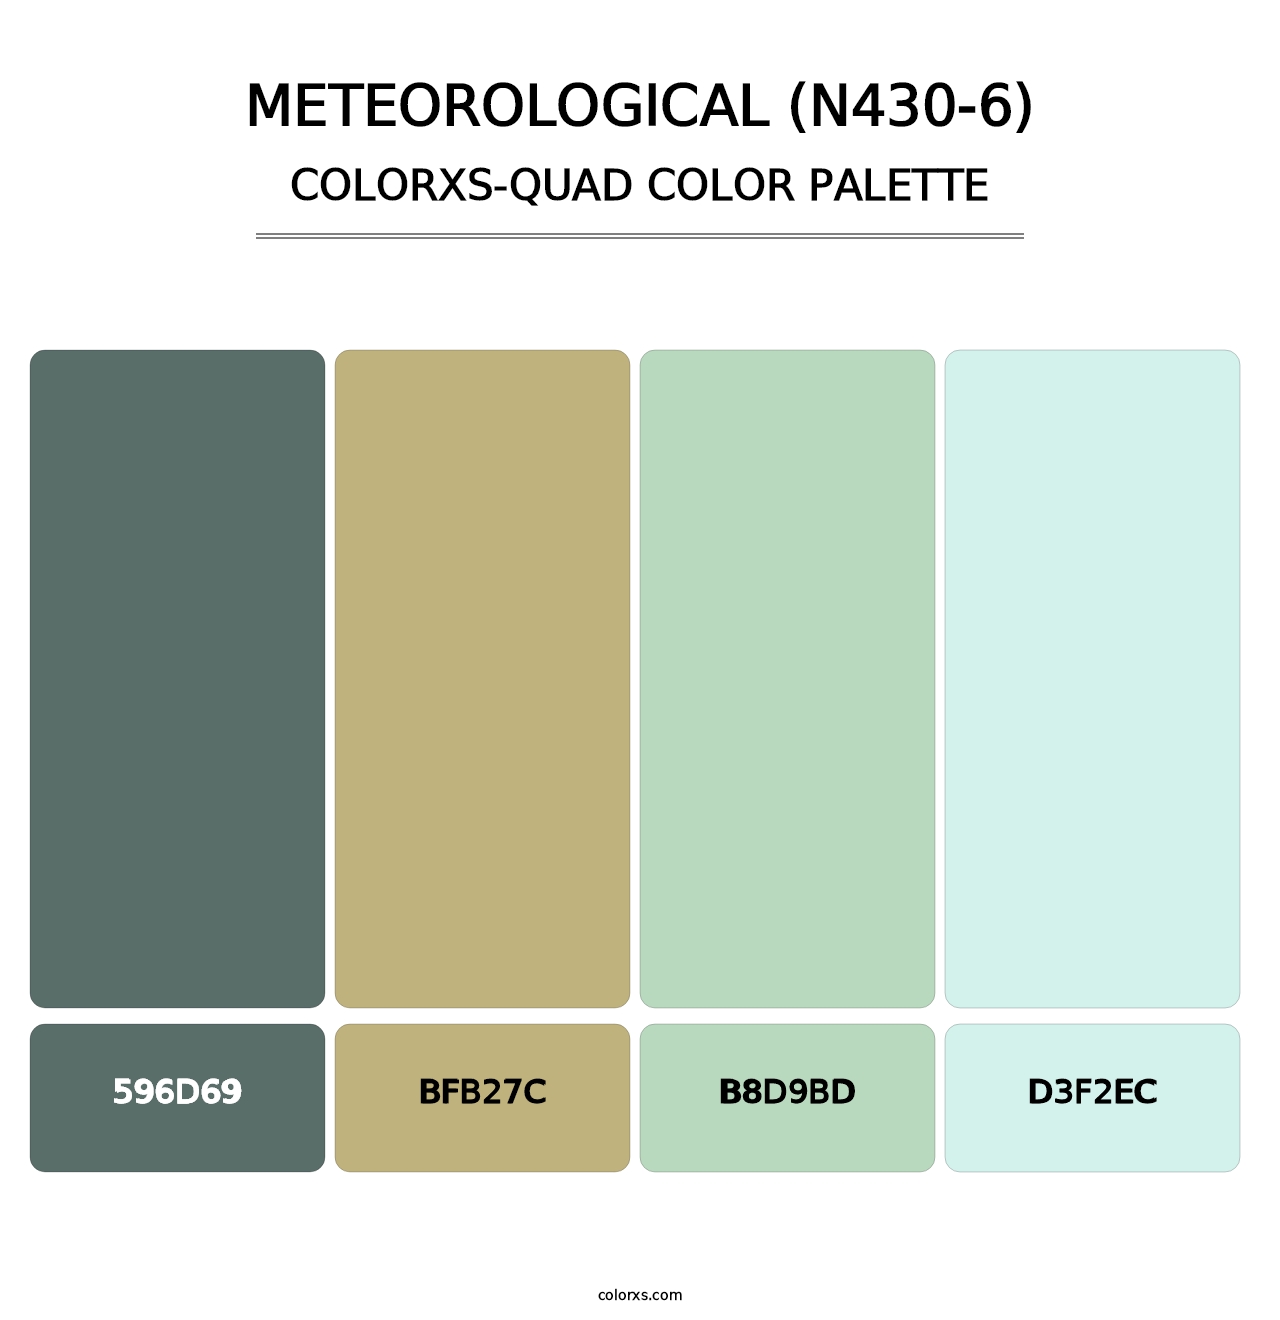 Meteorological (N430-6) - Colorxs Quad Palette